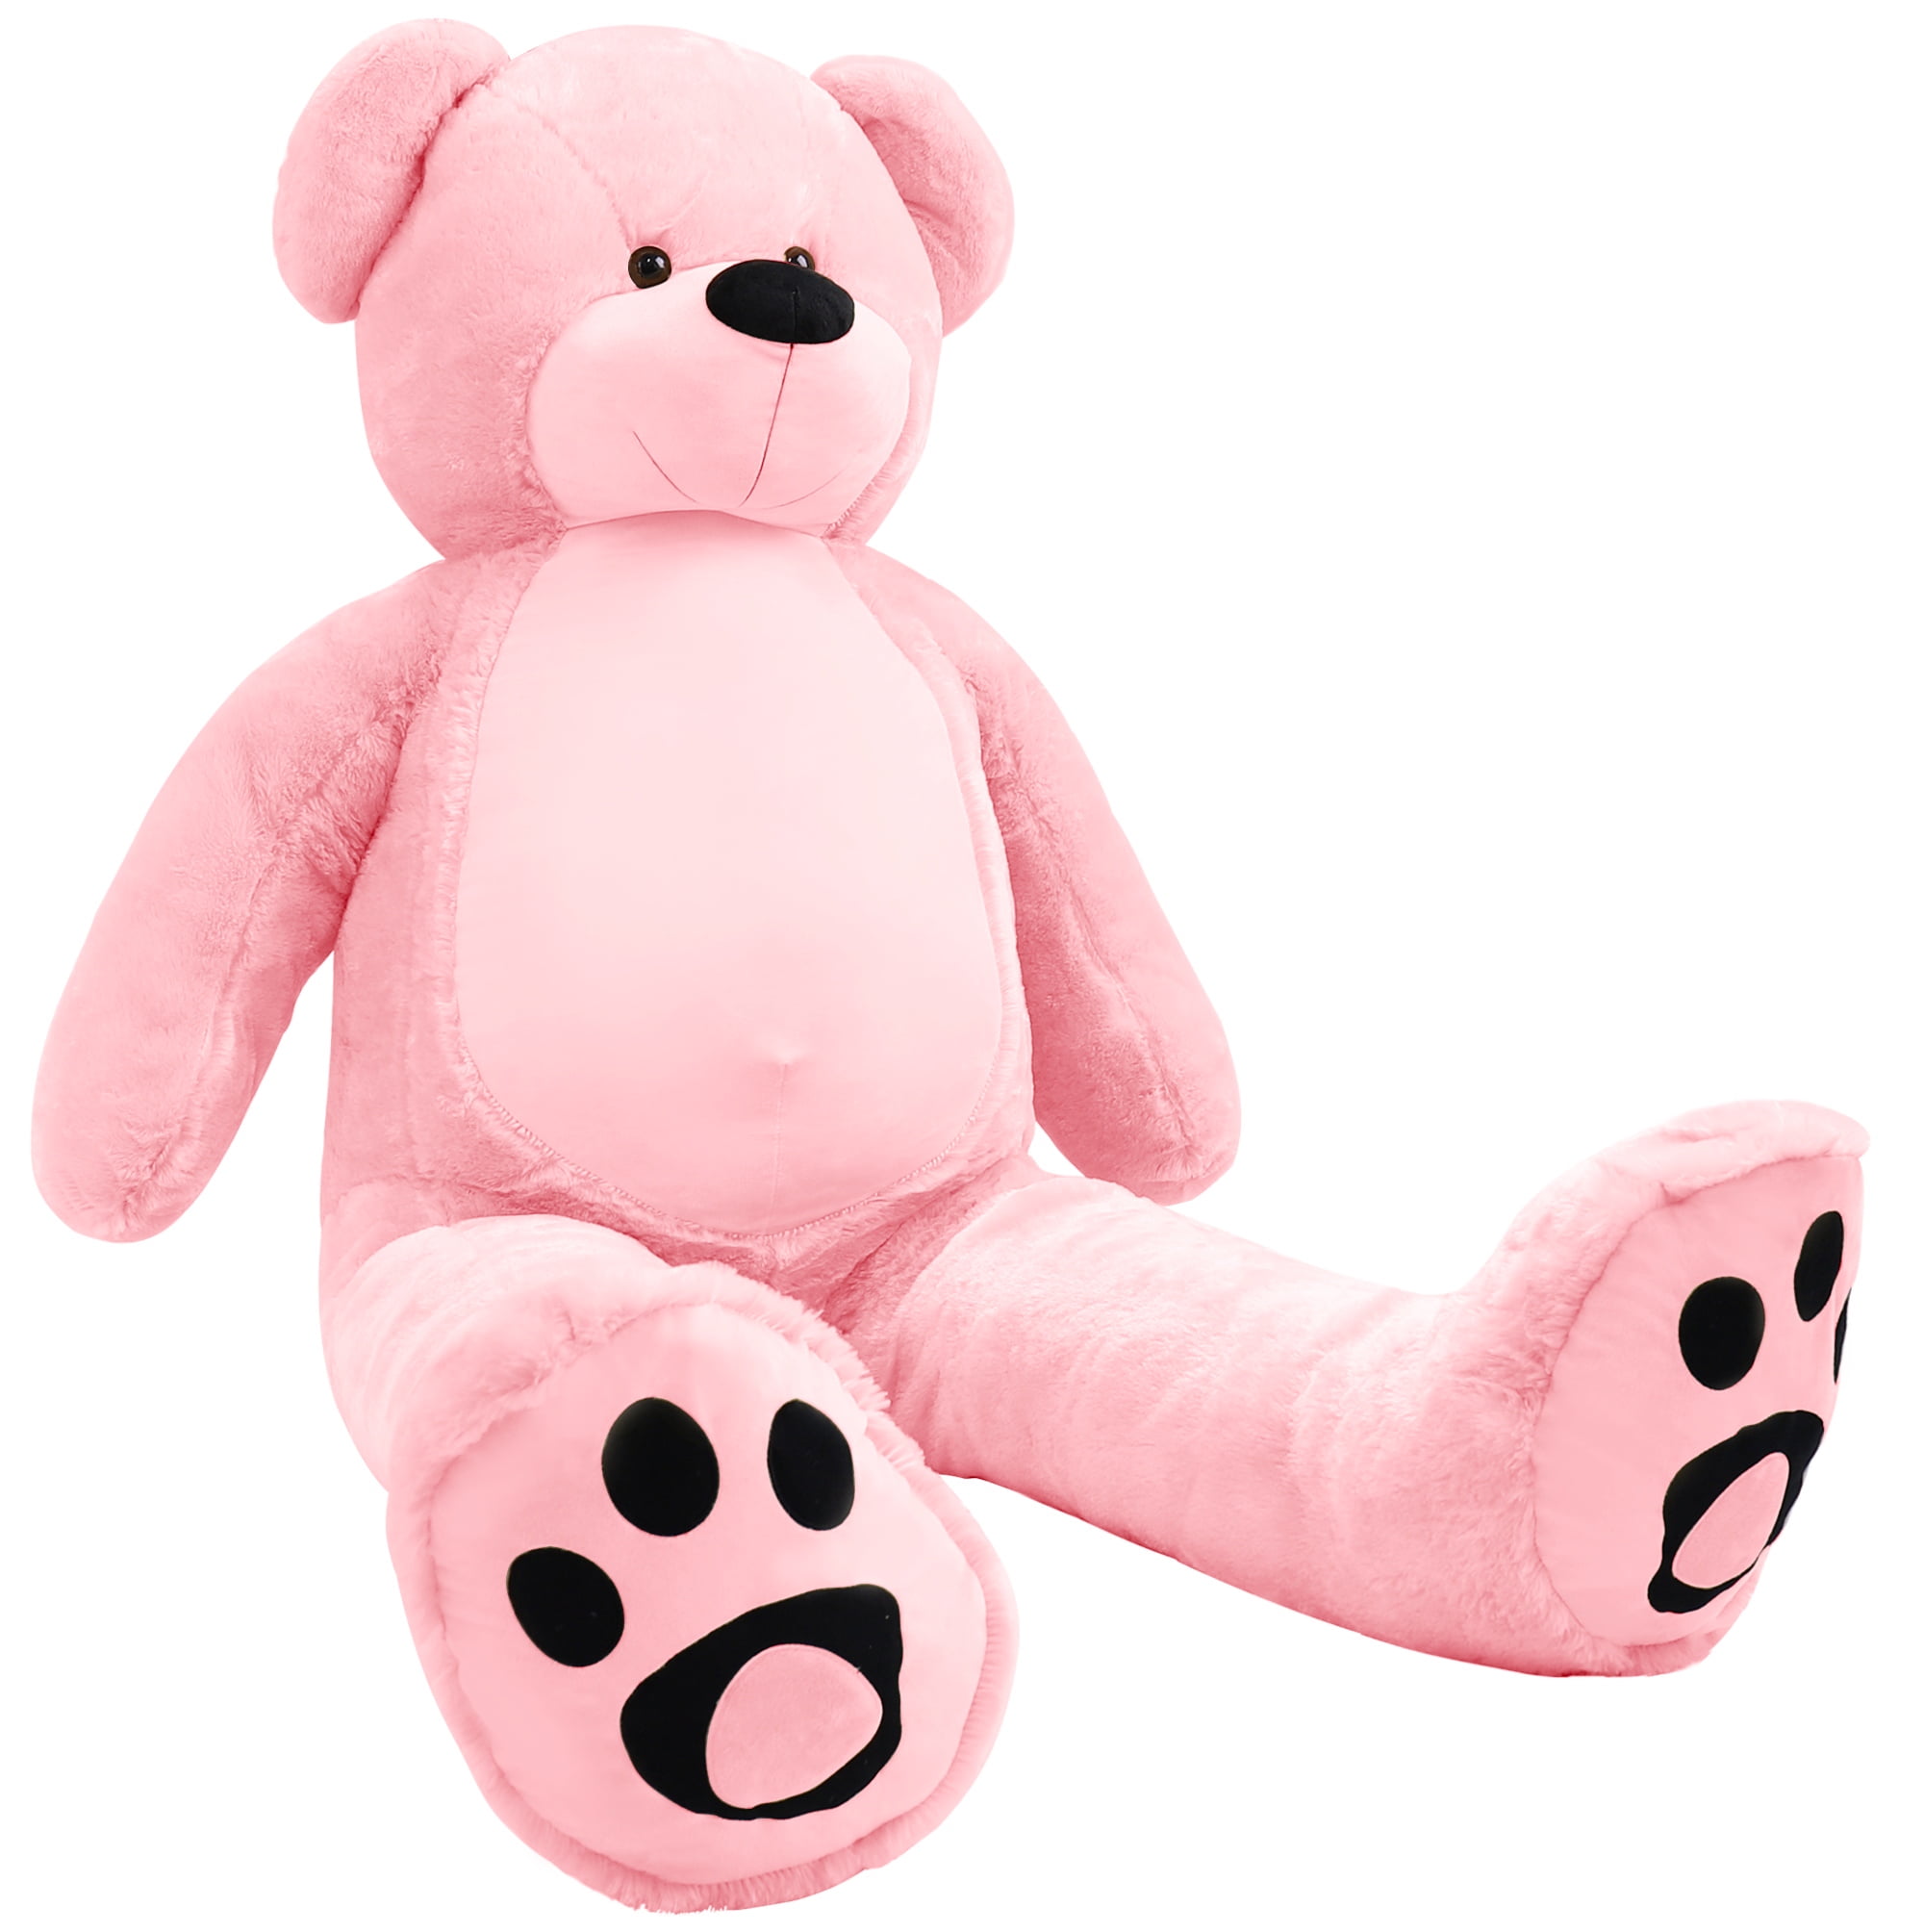 2019 Hot Huge Giant Teddy Bear Stuffed Plush Toy Kids Holiday Gift 100cm/39.37" 